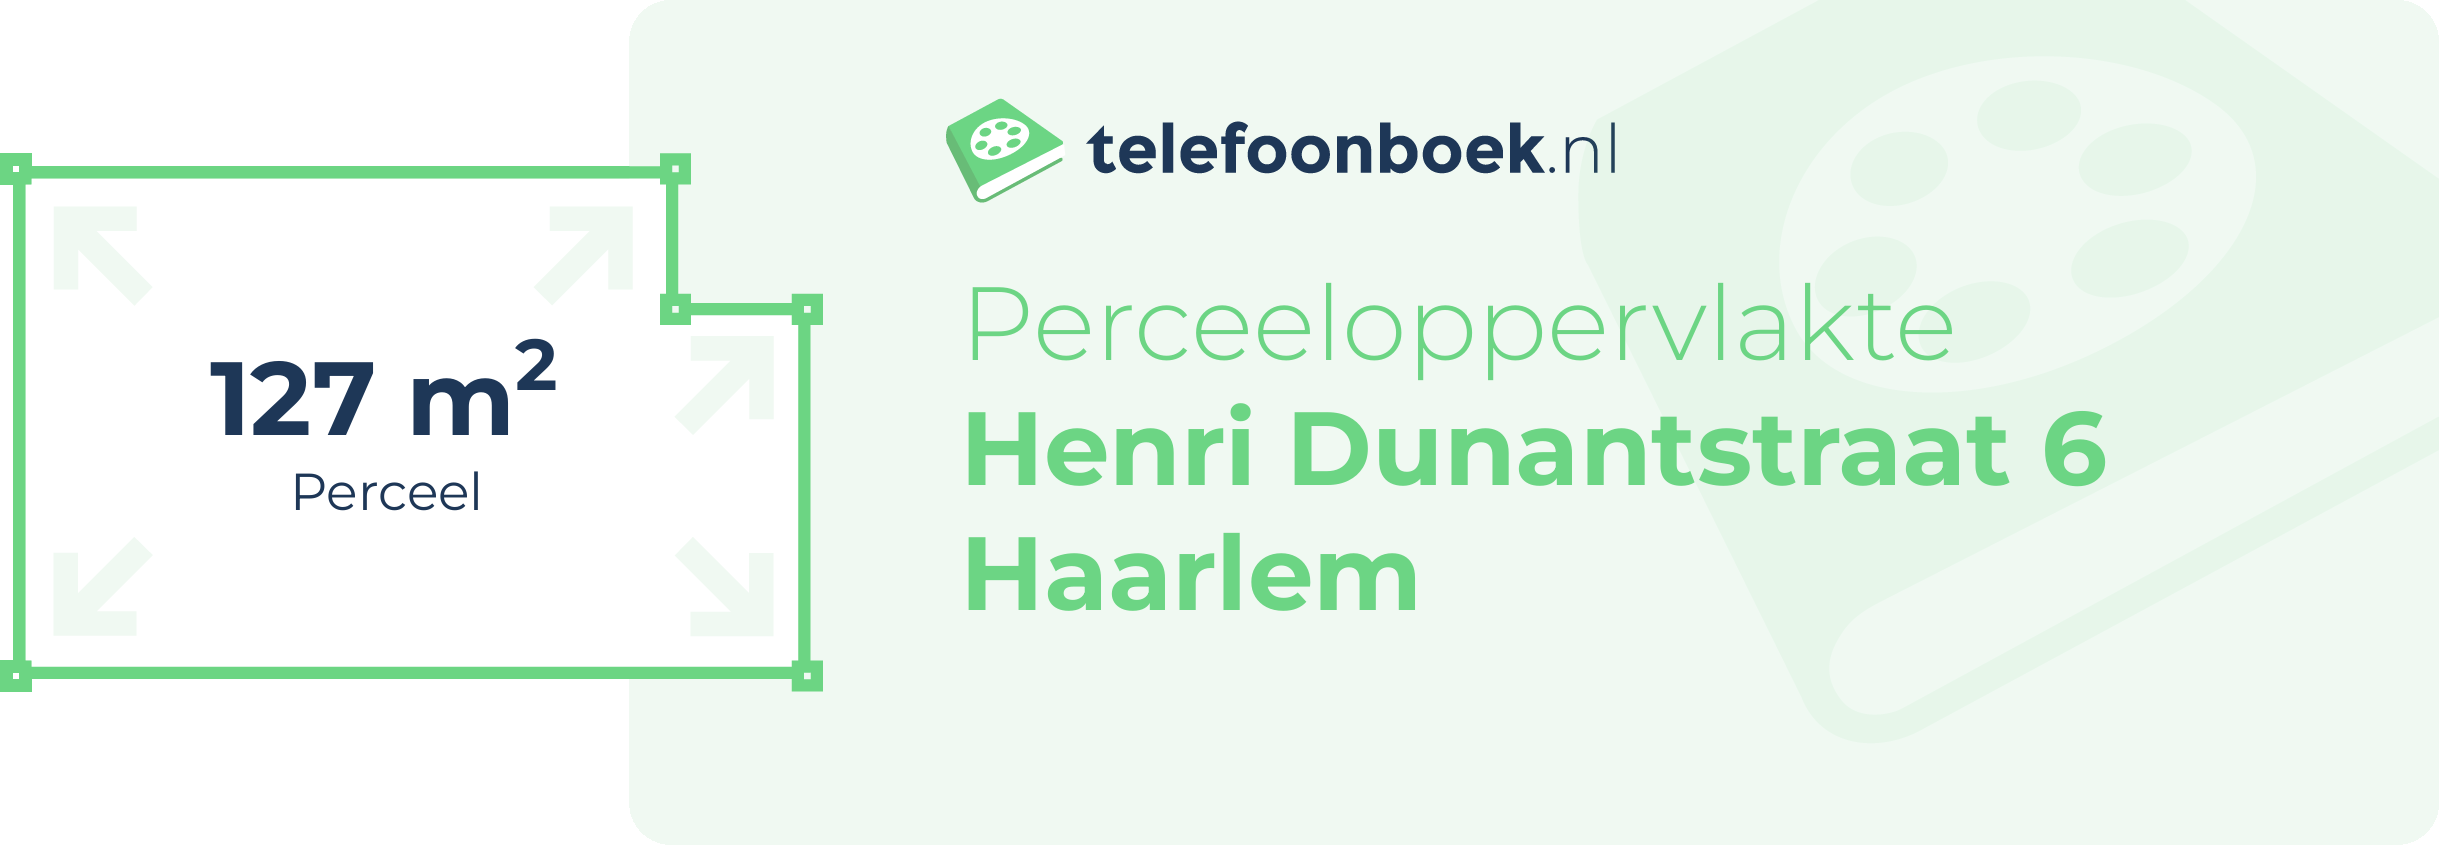 Perceeloppervlakte Henri Dunantstraat 6 Haarlem